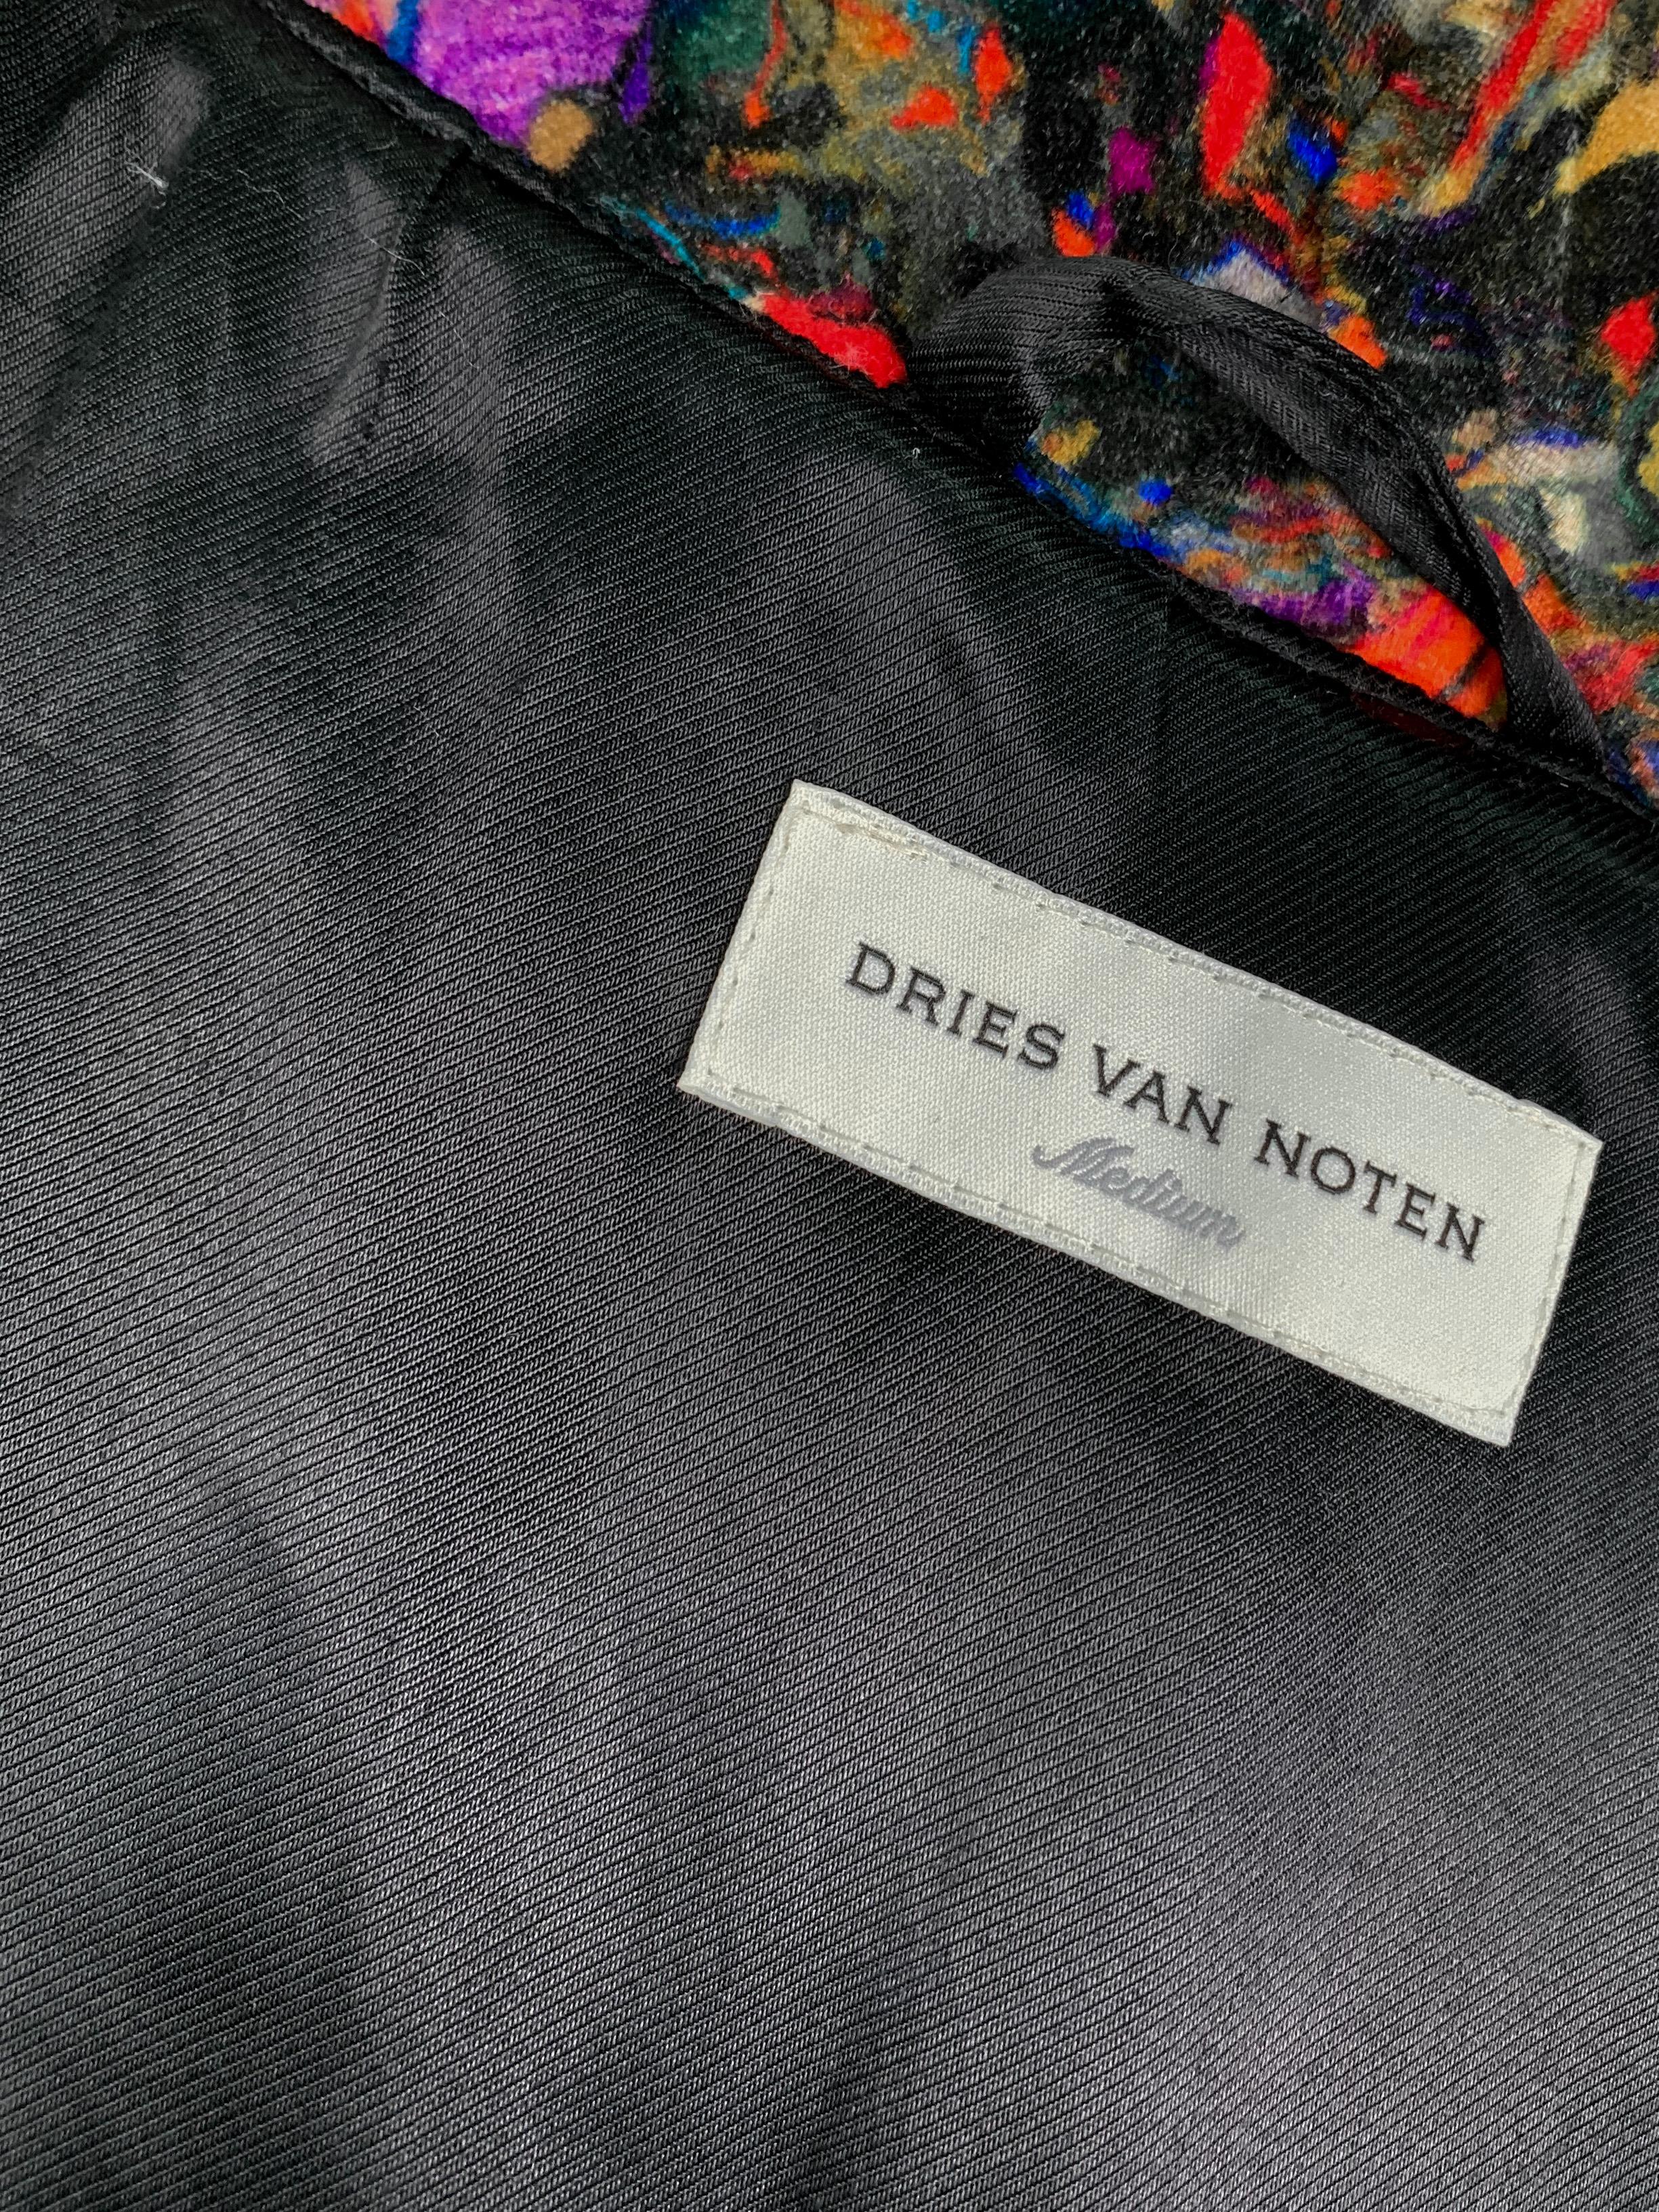 Dries Van Noten Runway Fall 2017 Silk Mix Printed Velvet Oversized Coat Medium 6